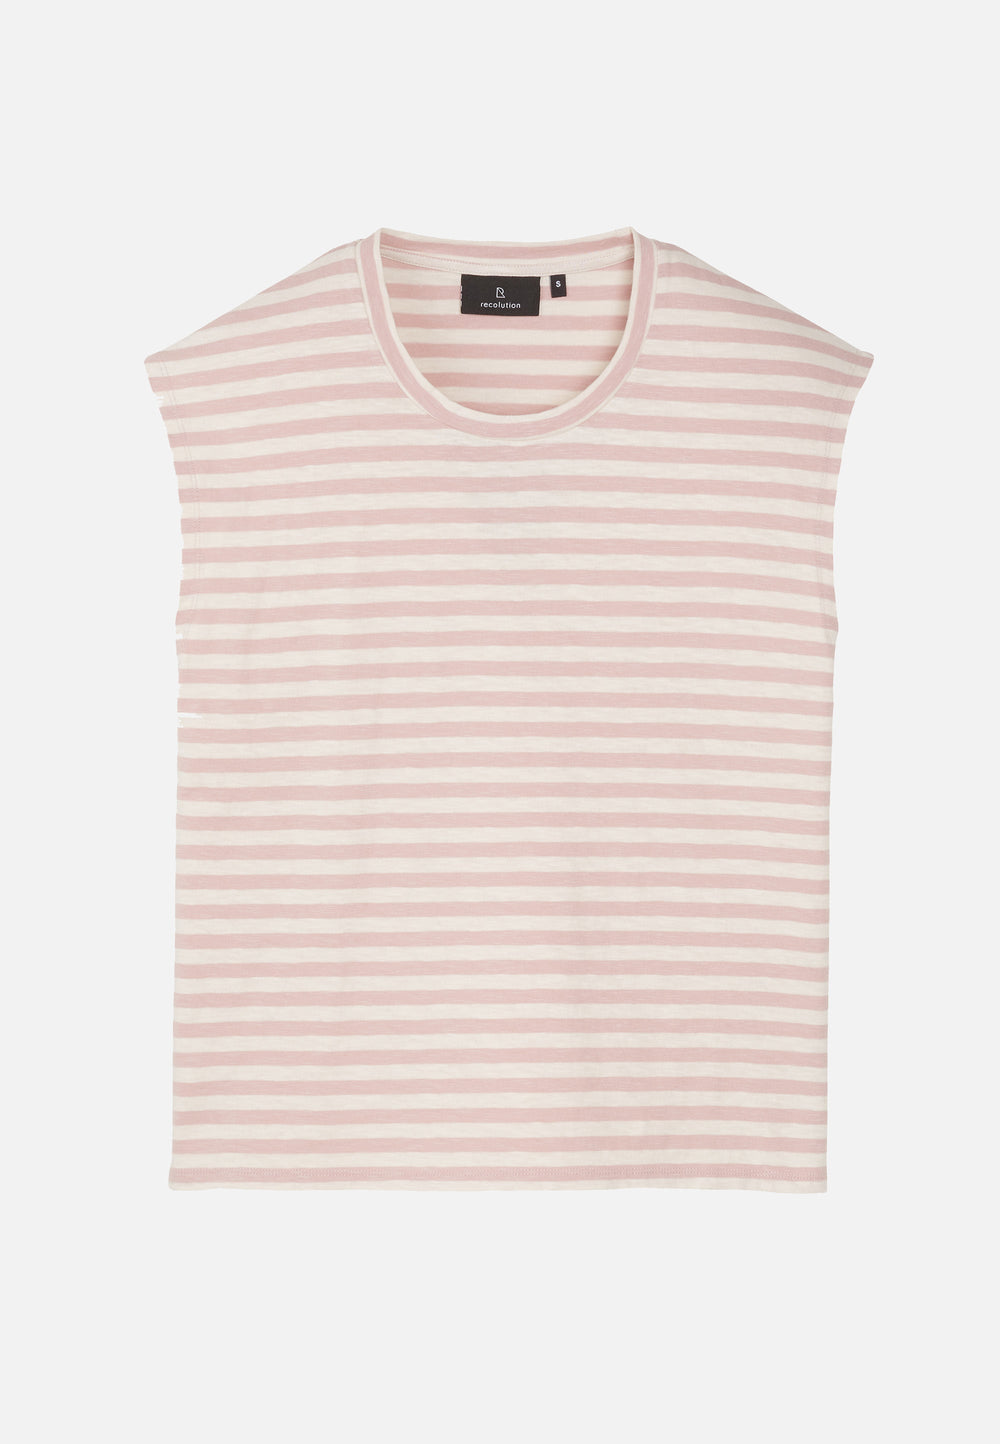 ZINNIA STRIPES Blush Rose T-Shirt